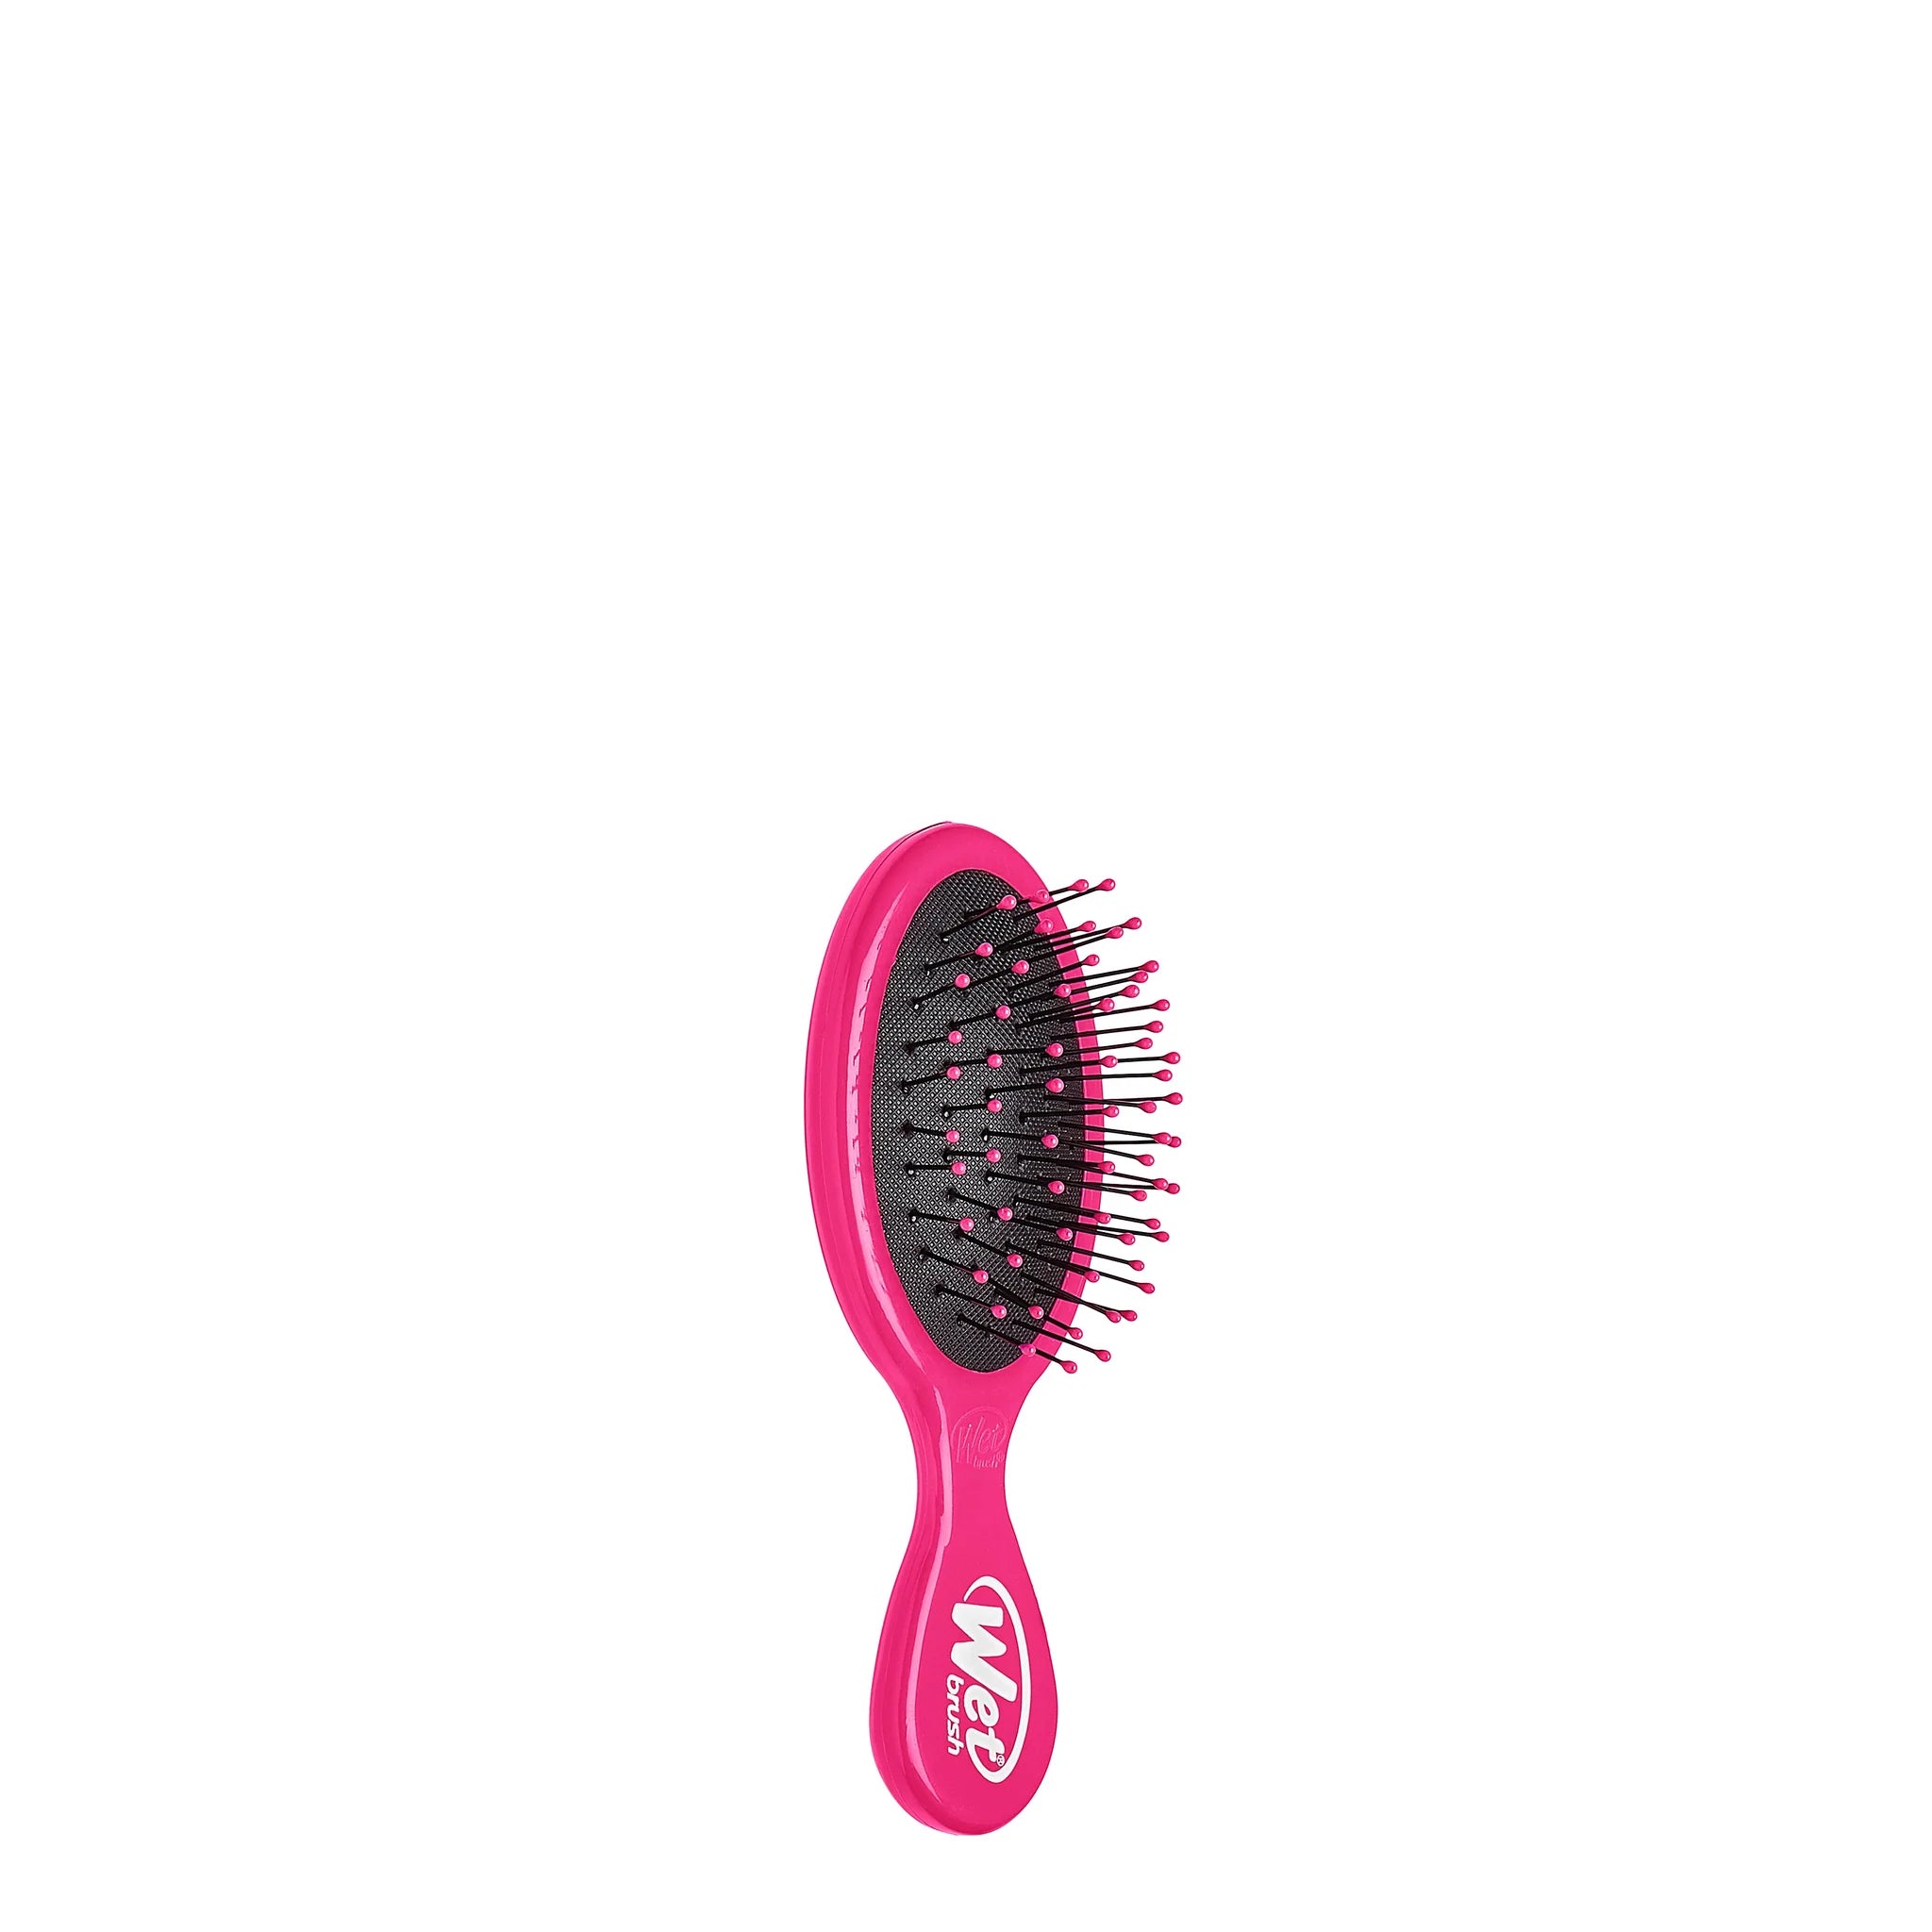 Wet Brush Original Detangler Hair Brush - Pink BWR830CCPK - Jacob